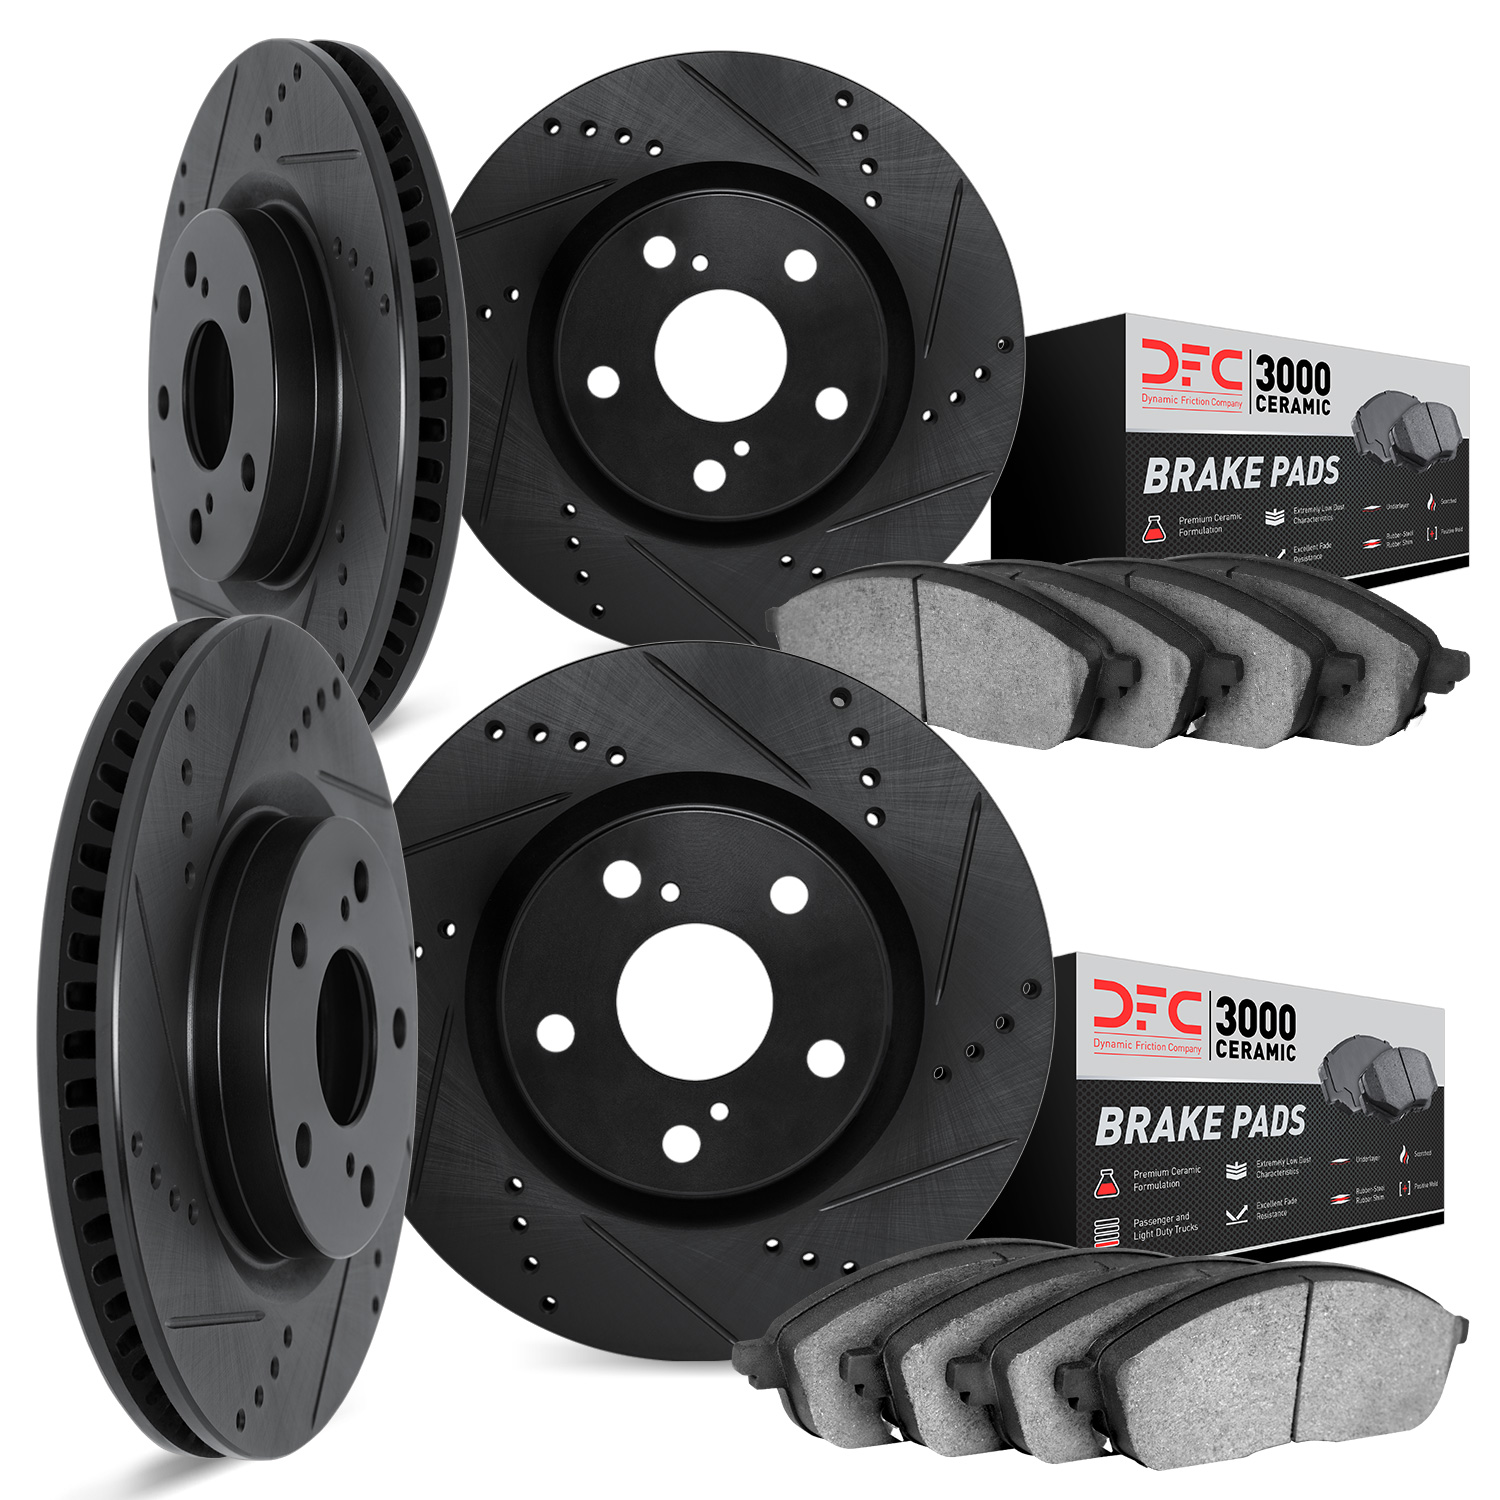 8304-54093 Drilled/Slotted Brake Rotors with 3000-Series Ceramic Brake Pads Kit [Black], 2013-2019 Ford/Lincoln/Mercury/Mazda, P